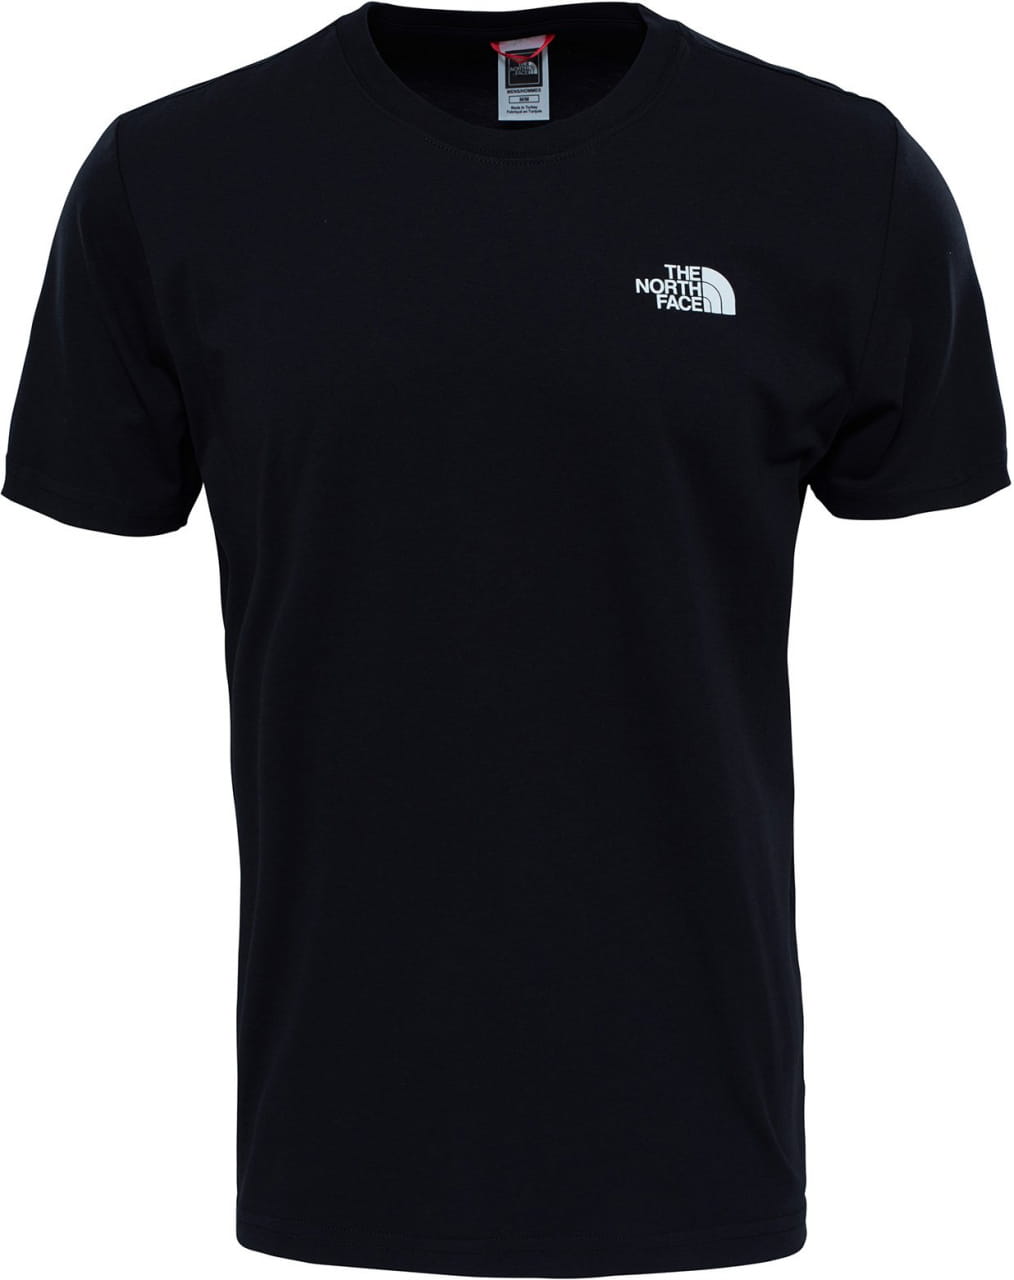 Herren-T-Shirt The North Face Men's Redbox Celebration T-Shirt